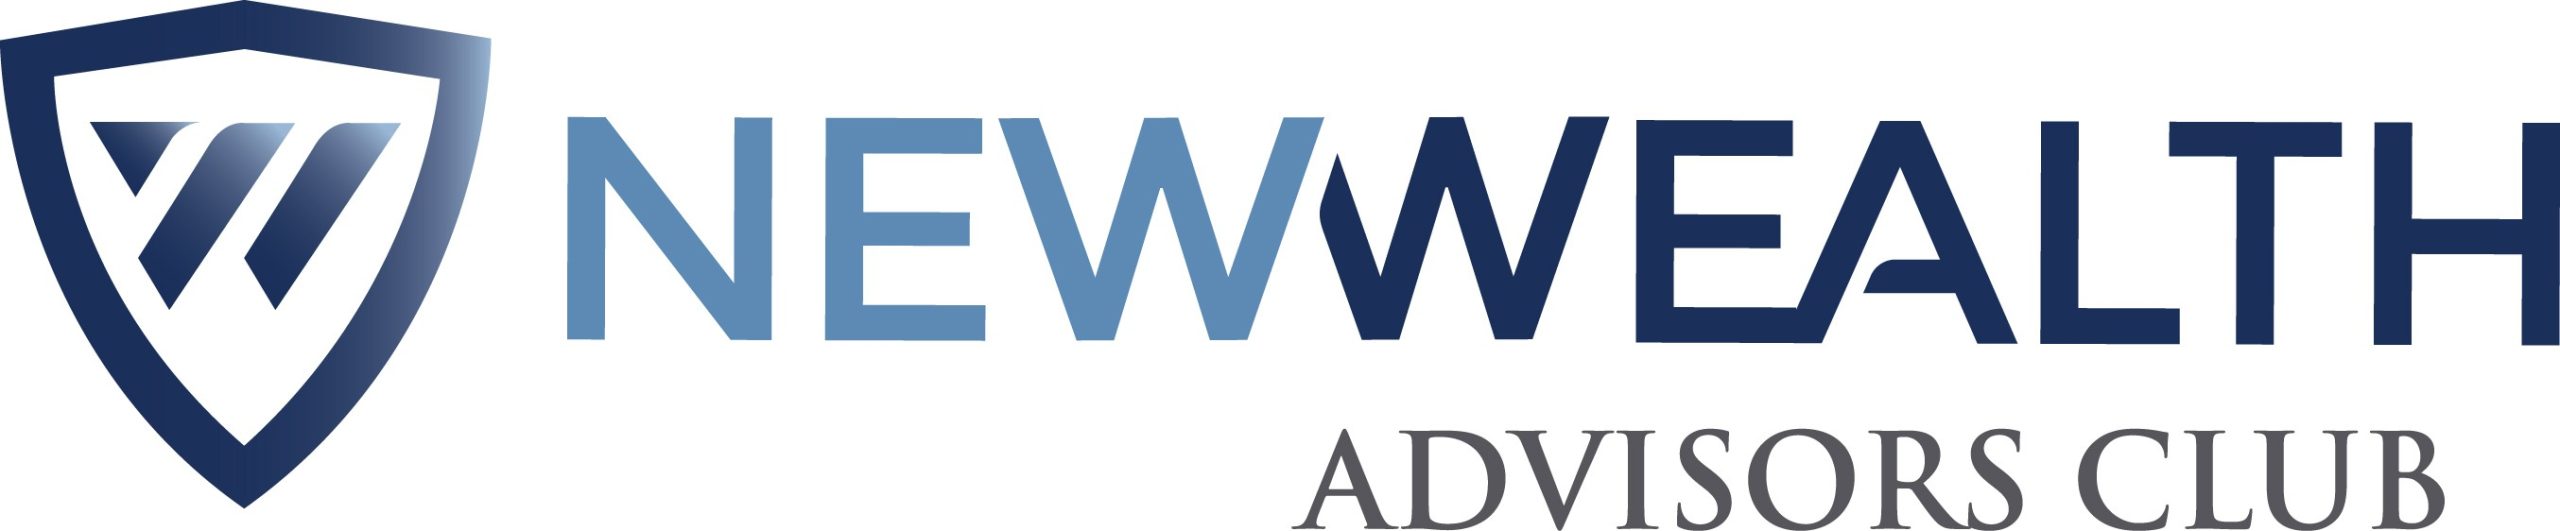 new wealth advisors club logo